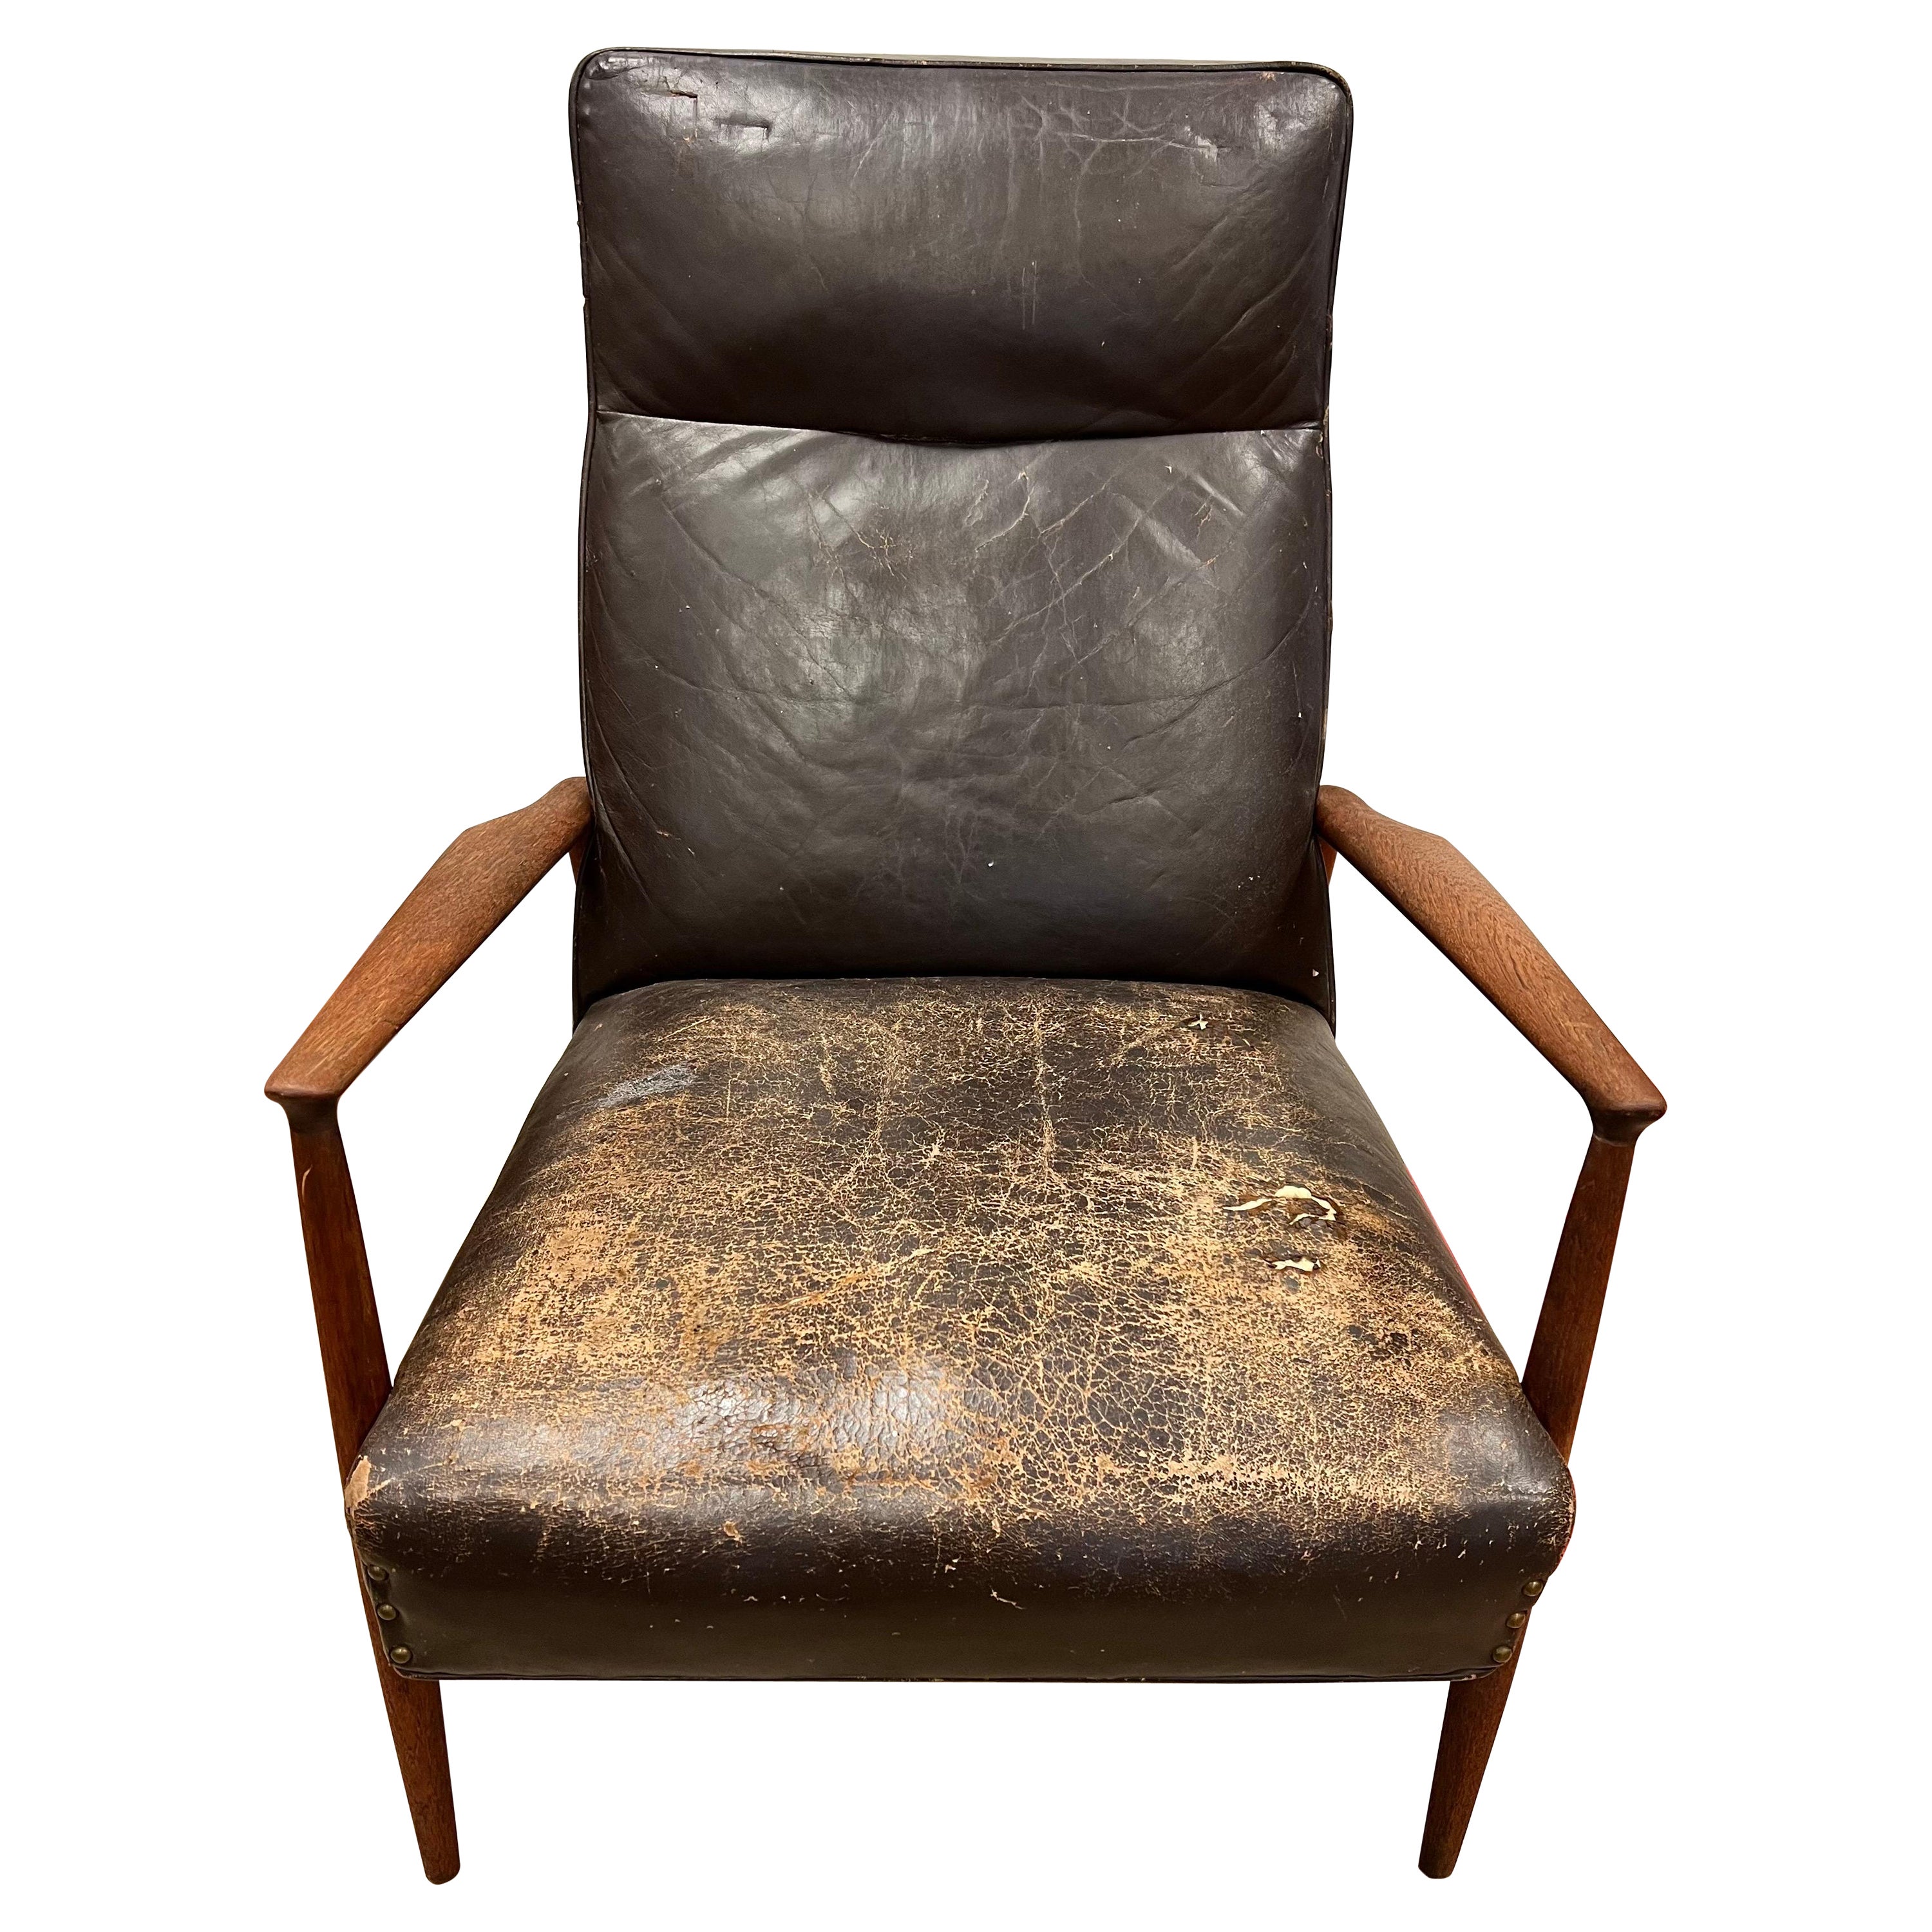 Rare Danish Modern Ib Kofod Larsen 1950s Leather Lounge Chair